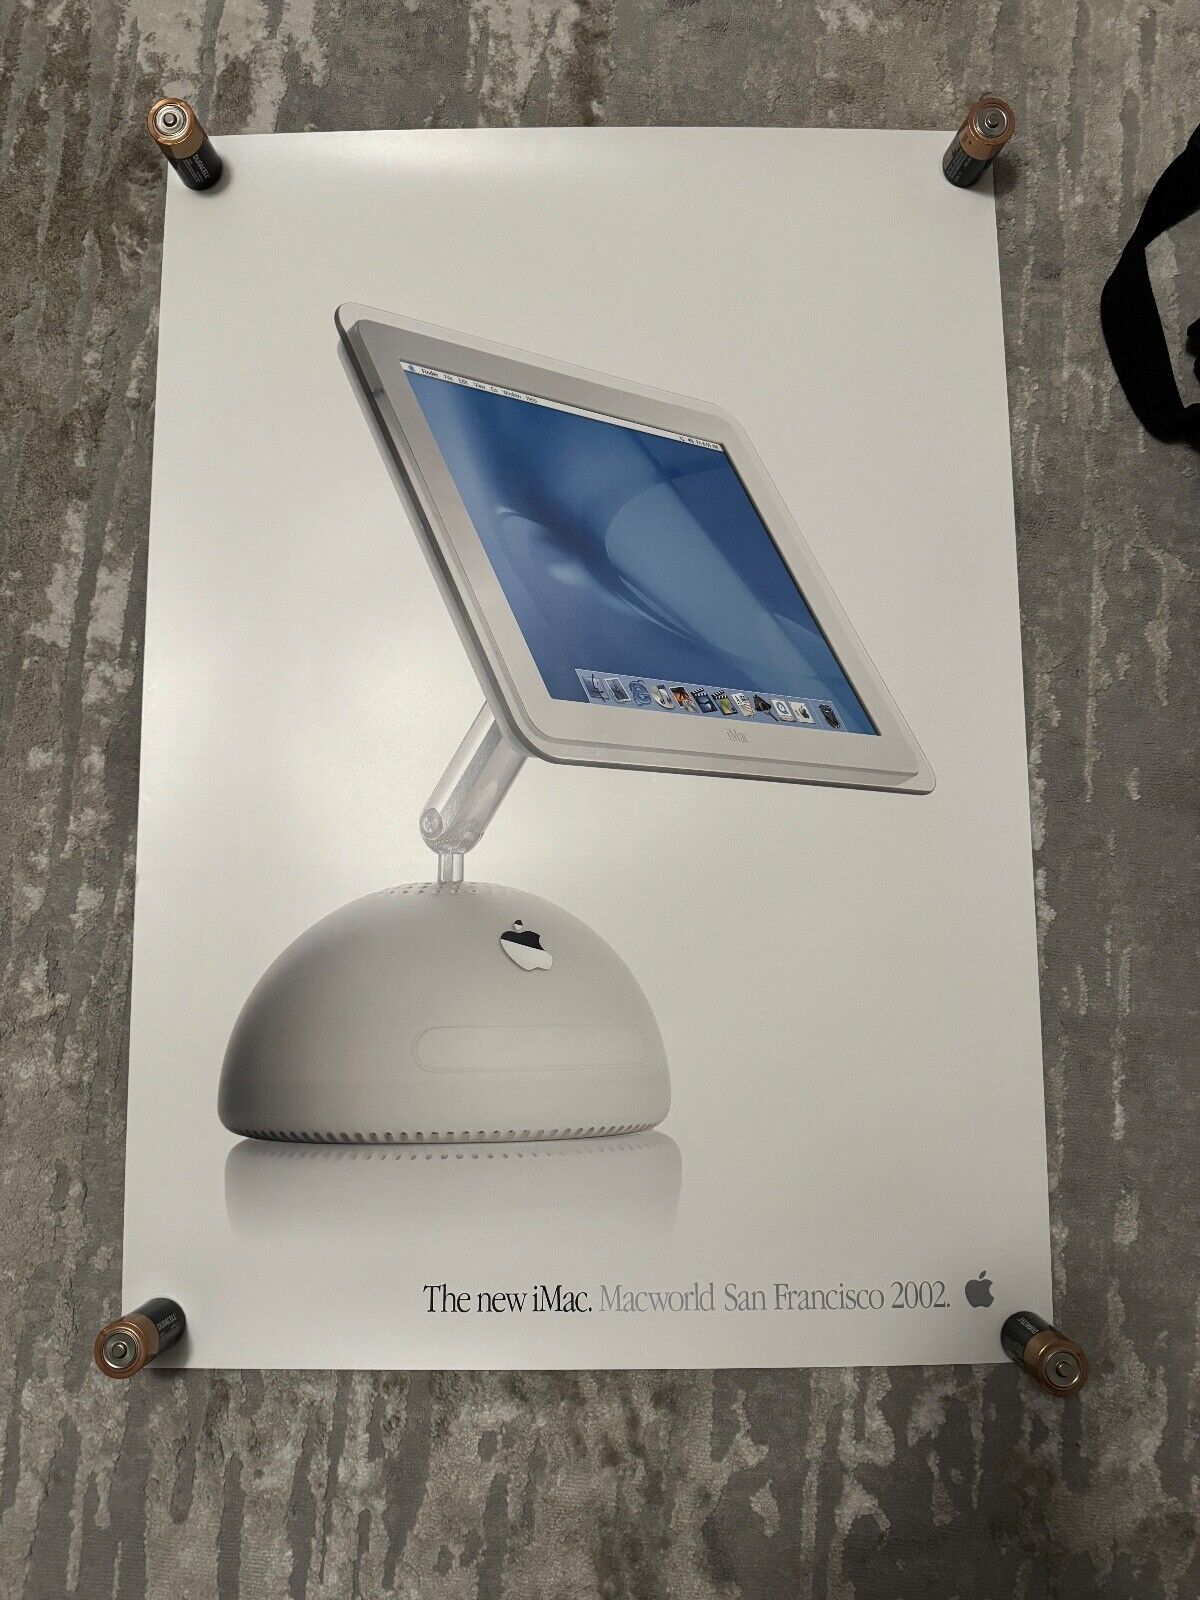 Vintage Apple Computer iMac MacWorld San Francisco Launch Poster